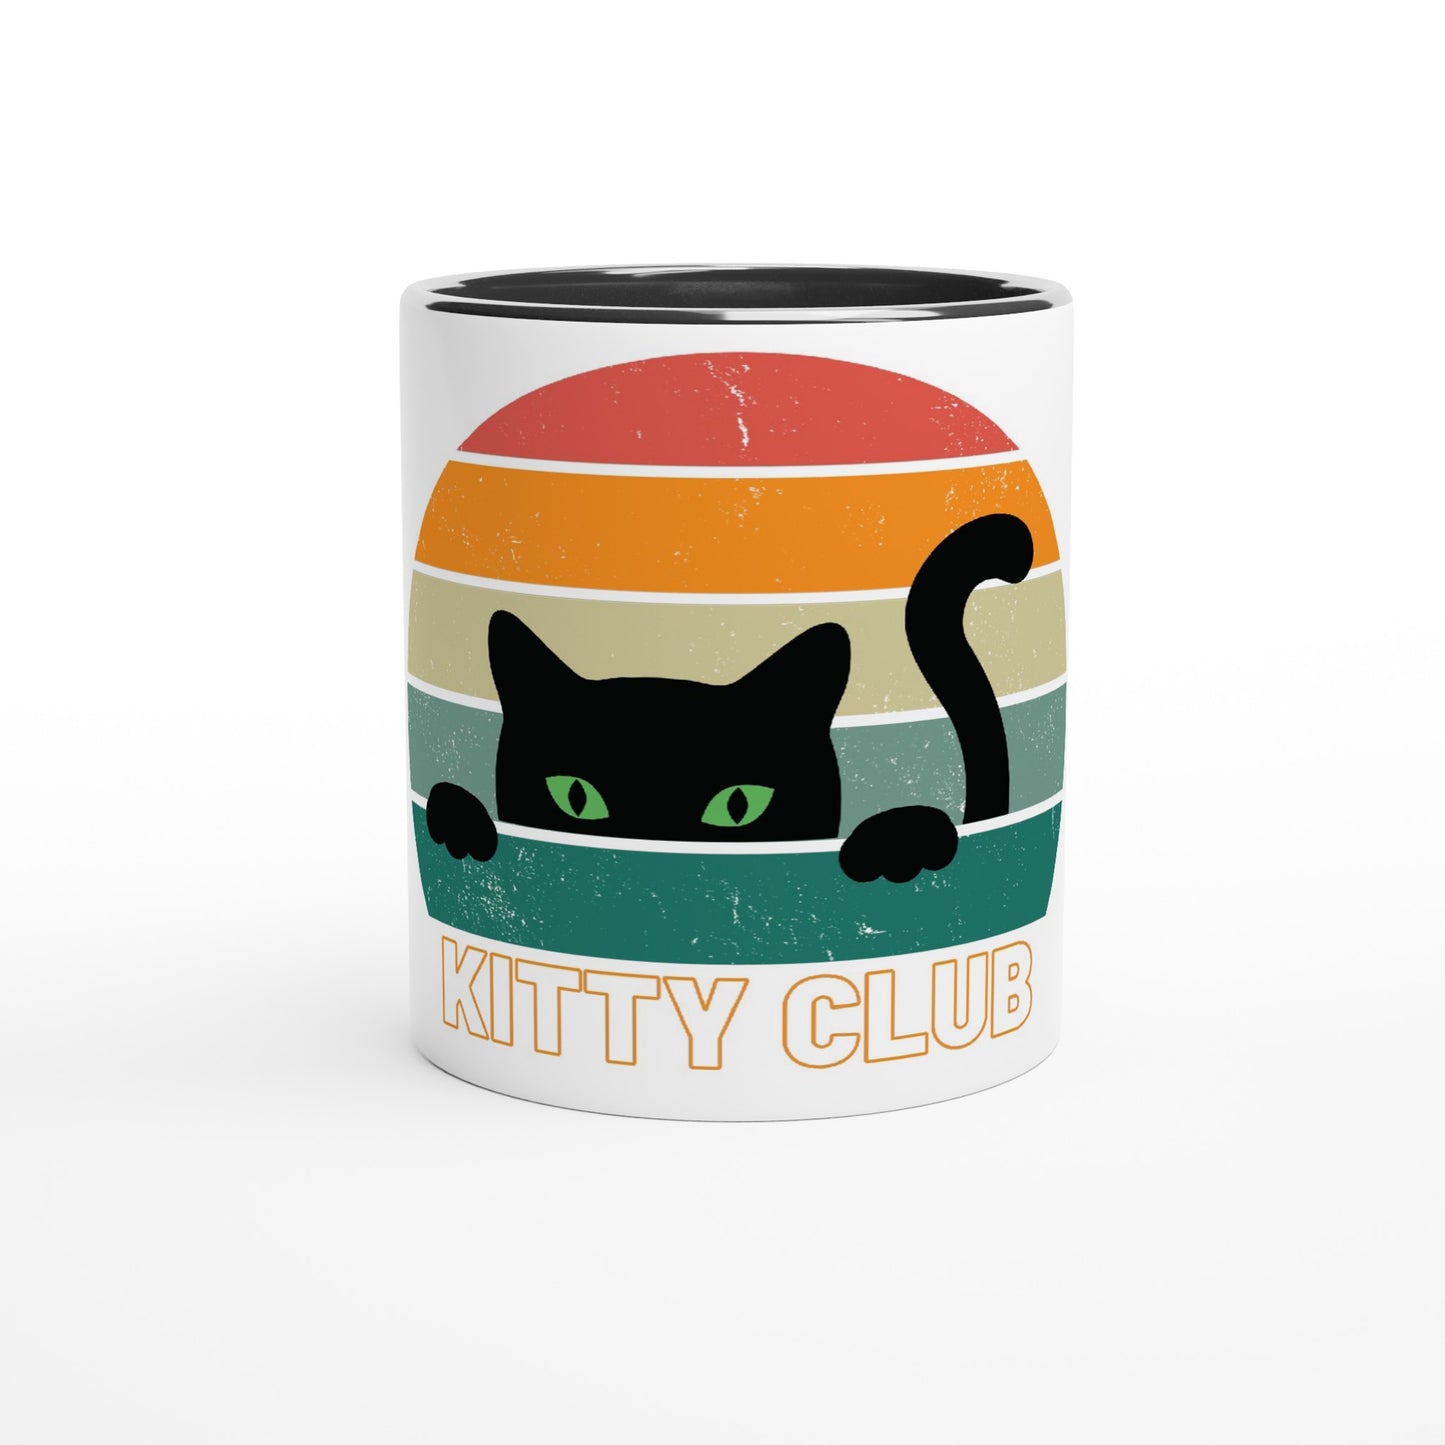 Kitty Club - White 11oz Ceramic Mug with Color Inside